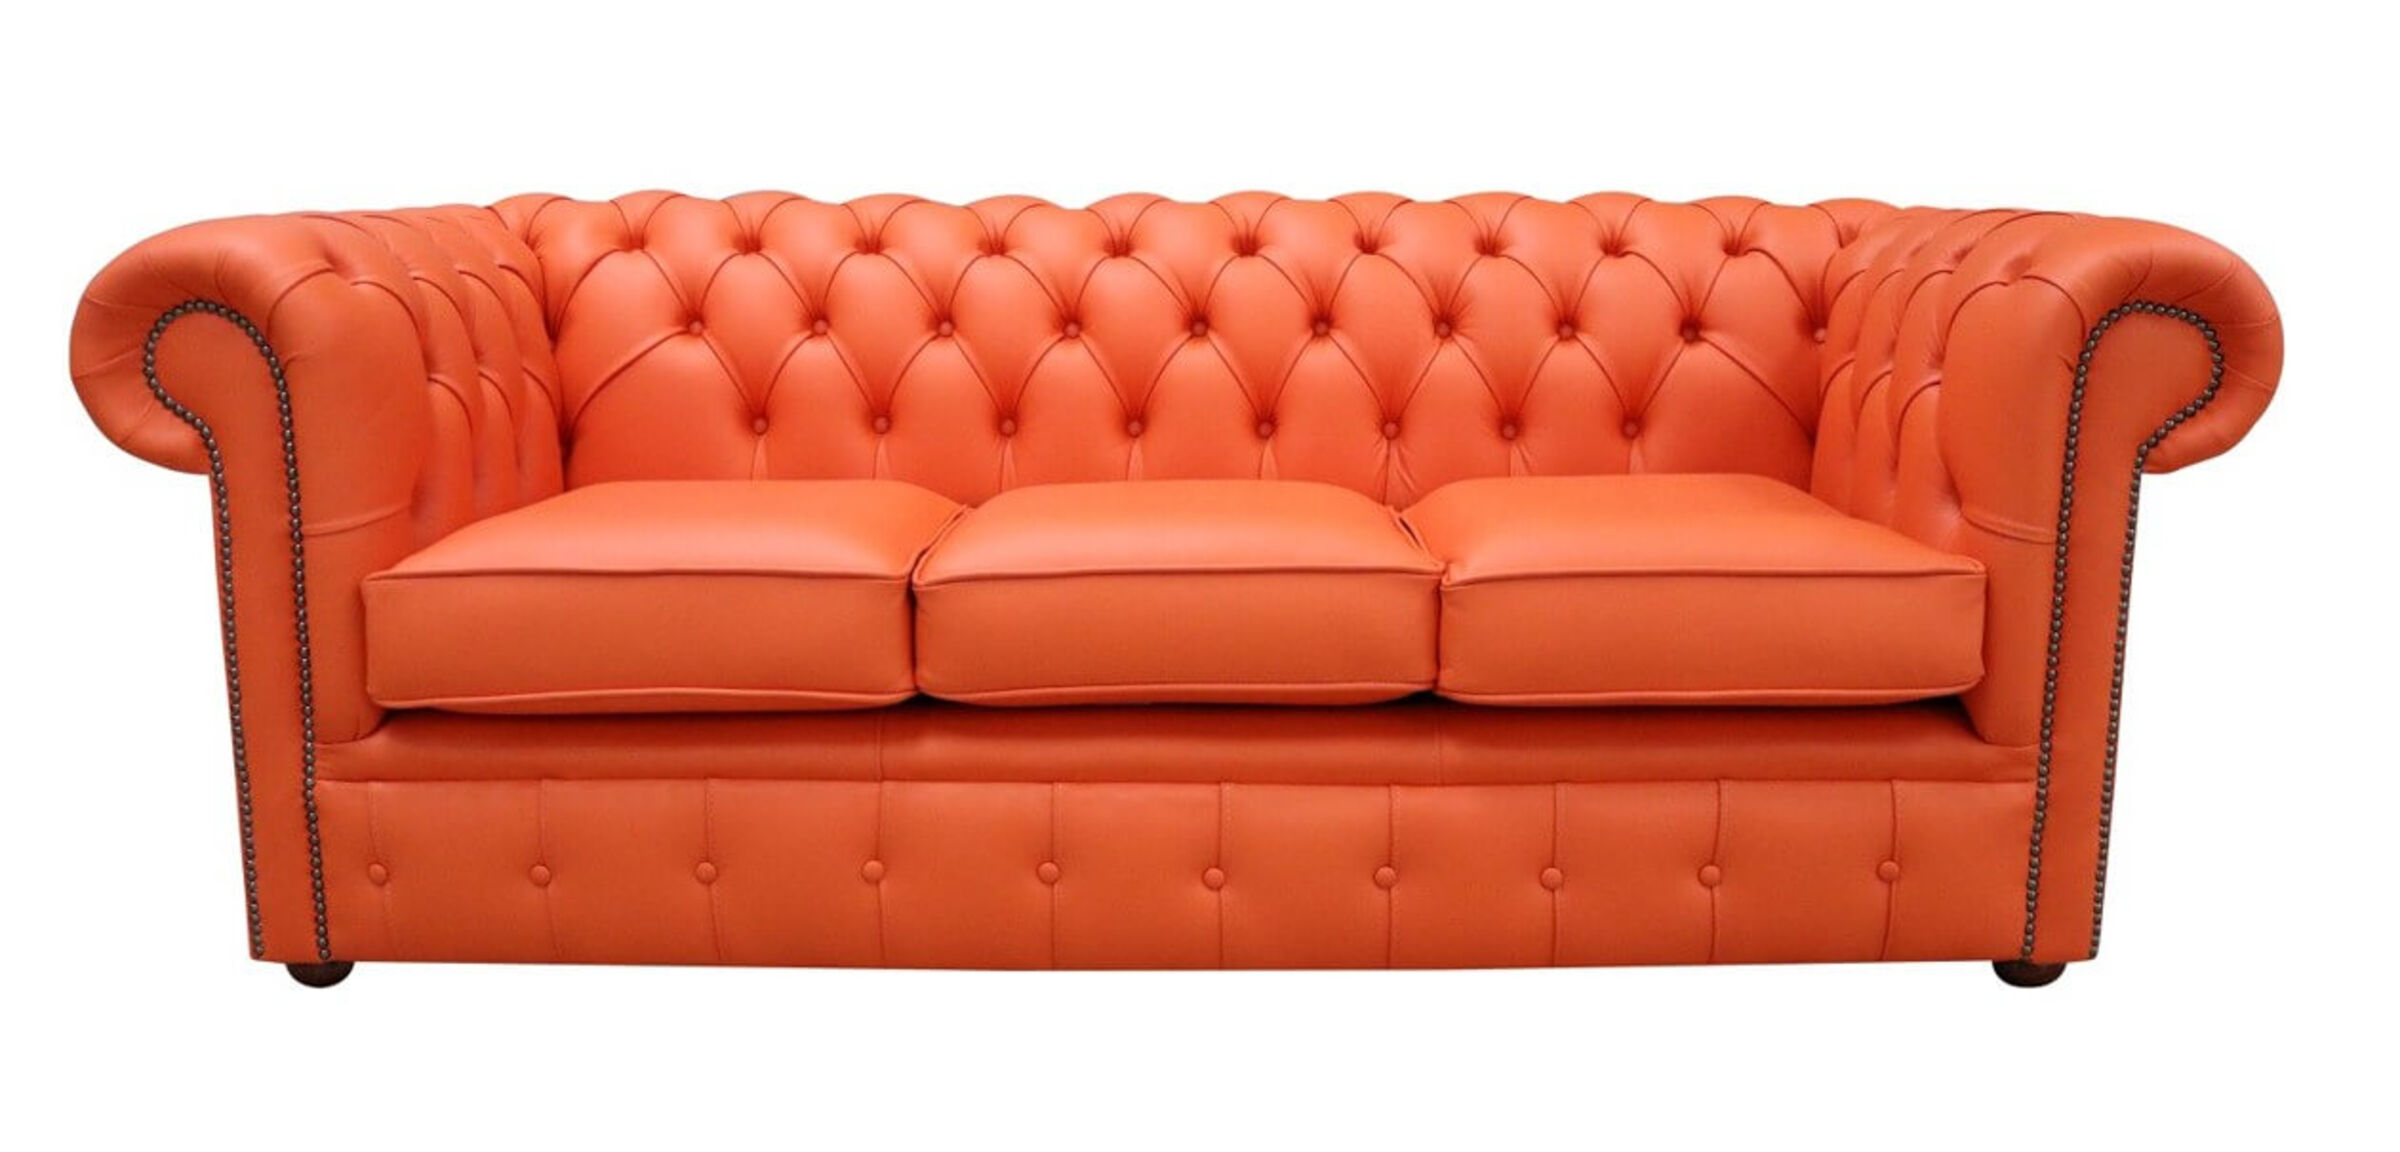 Chesterfield Handmade 3 Seater Sofa, Leather Orange Sofa